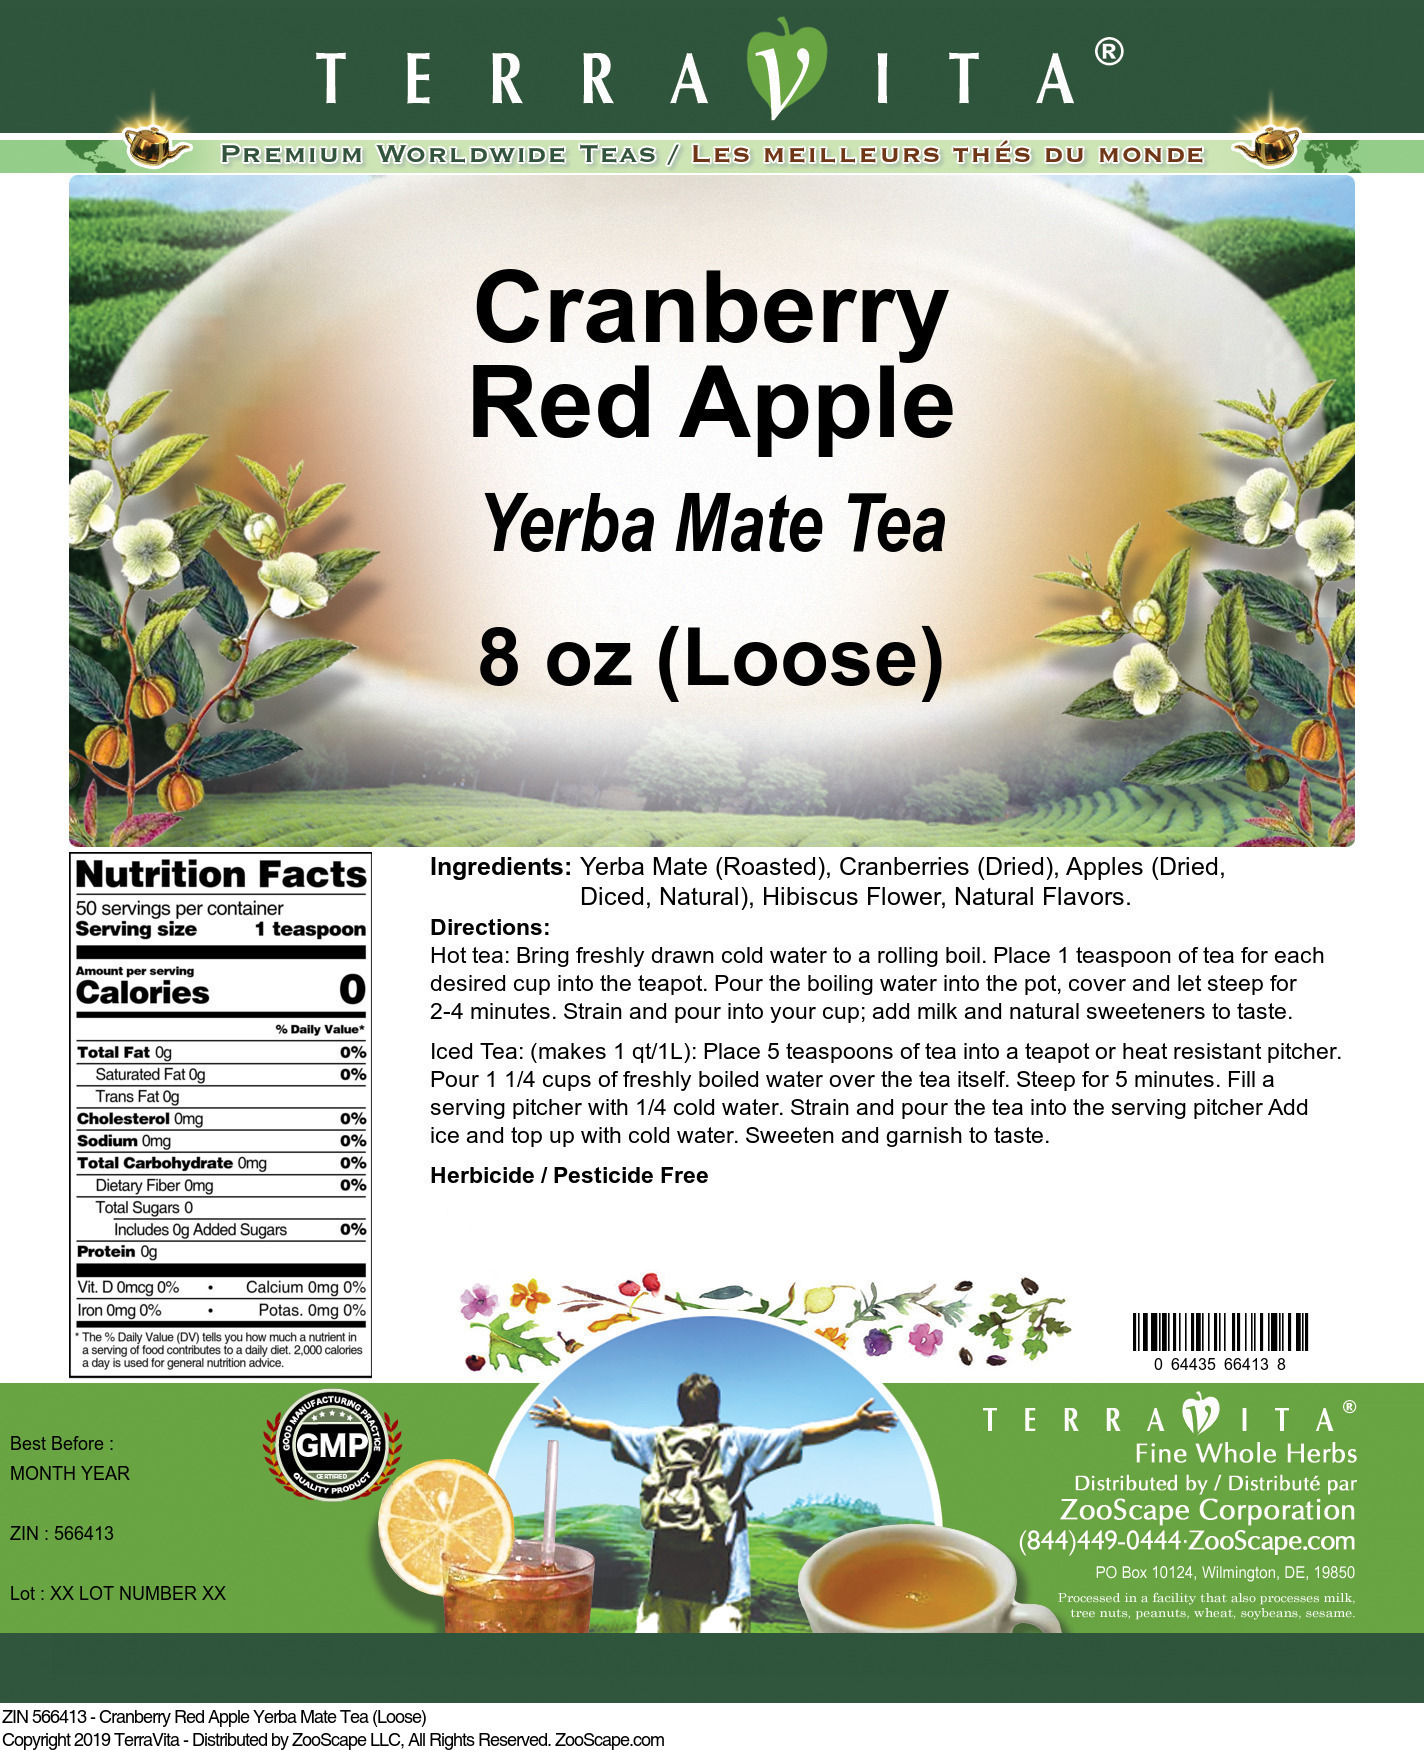 Cranberry Red Apple Yerba Mate Tea (Loose) - Label